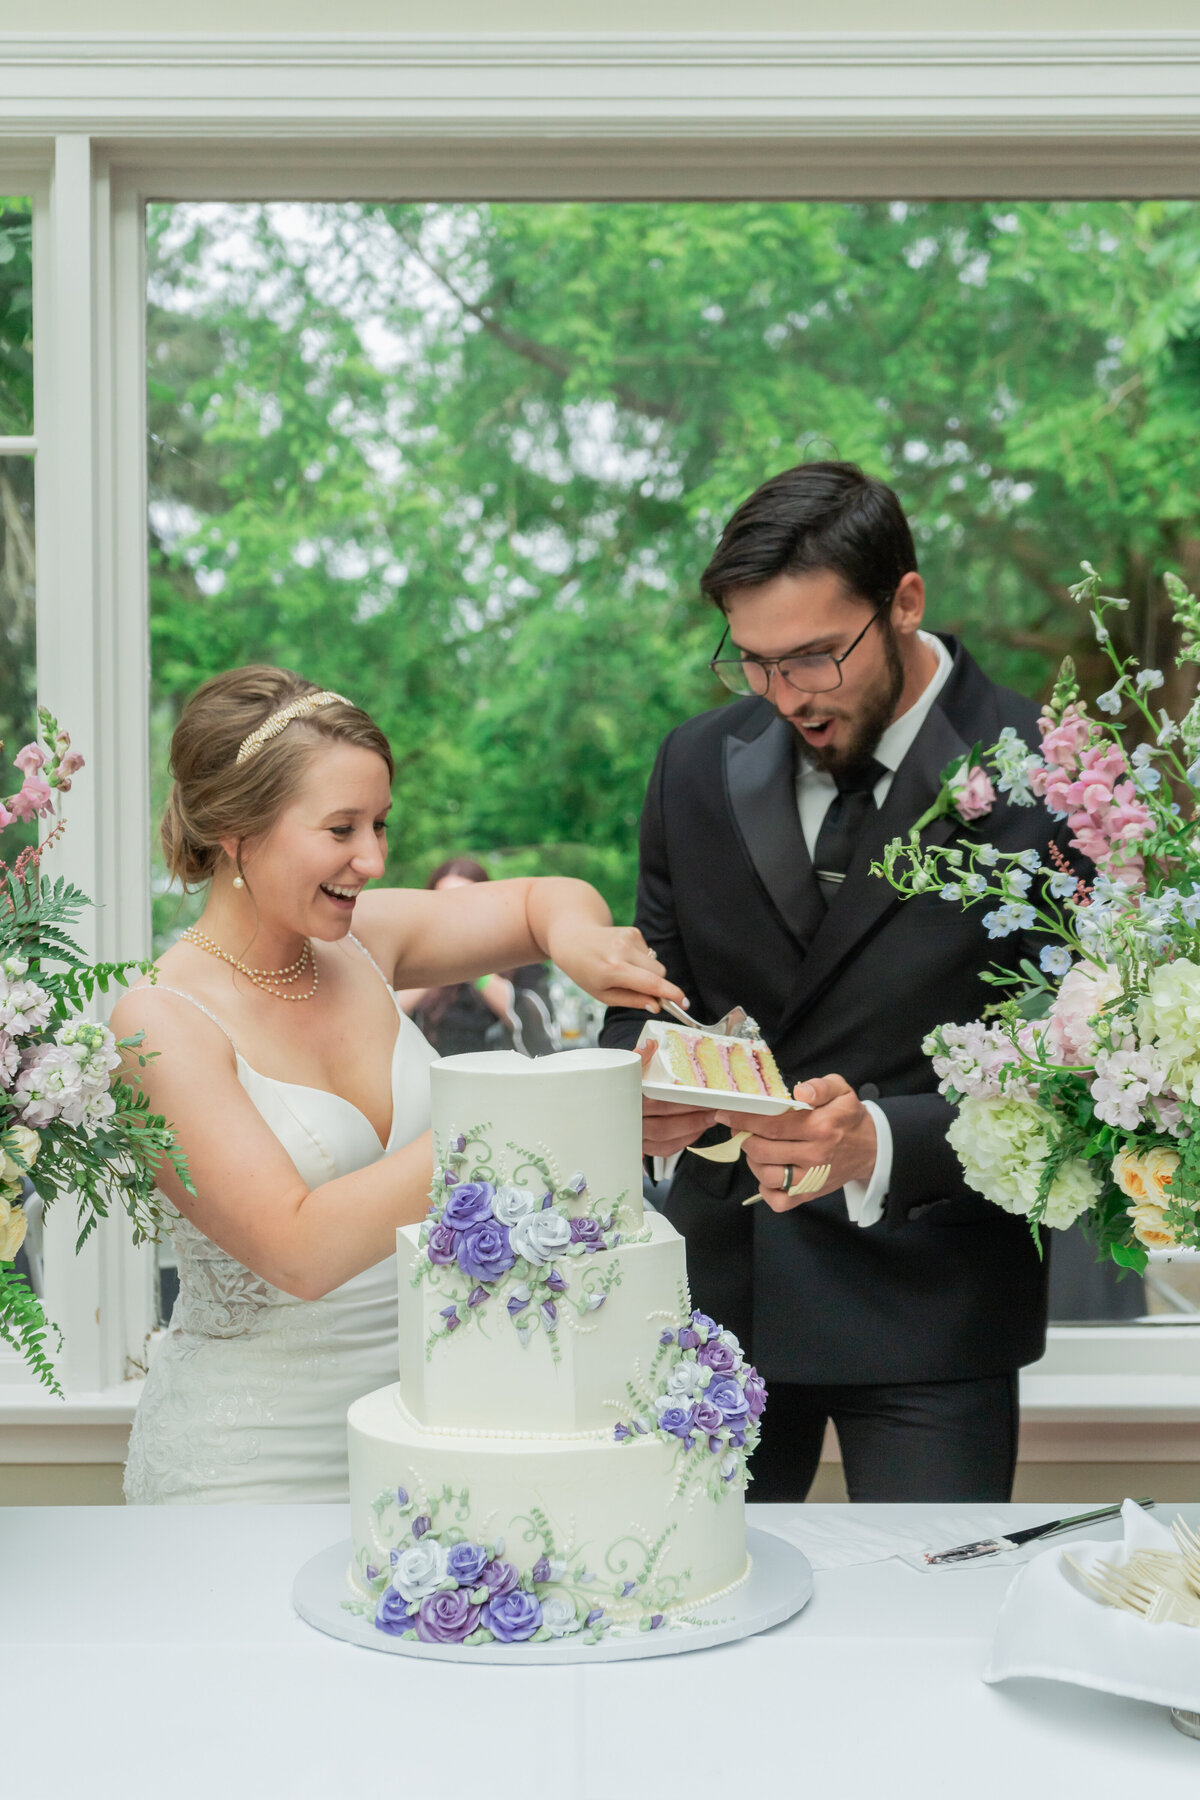 bride and groom cutting cake. Fine art photo by 4Karma Studio. Photographer in San Francisco Bay Area